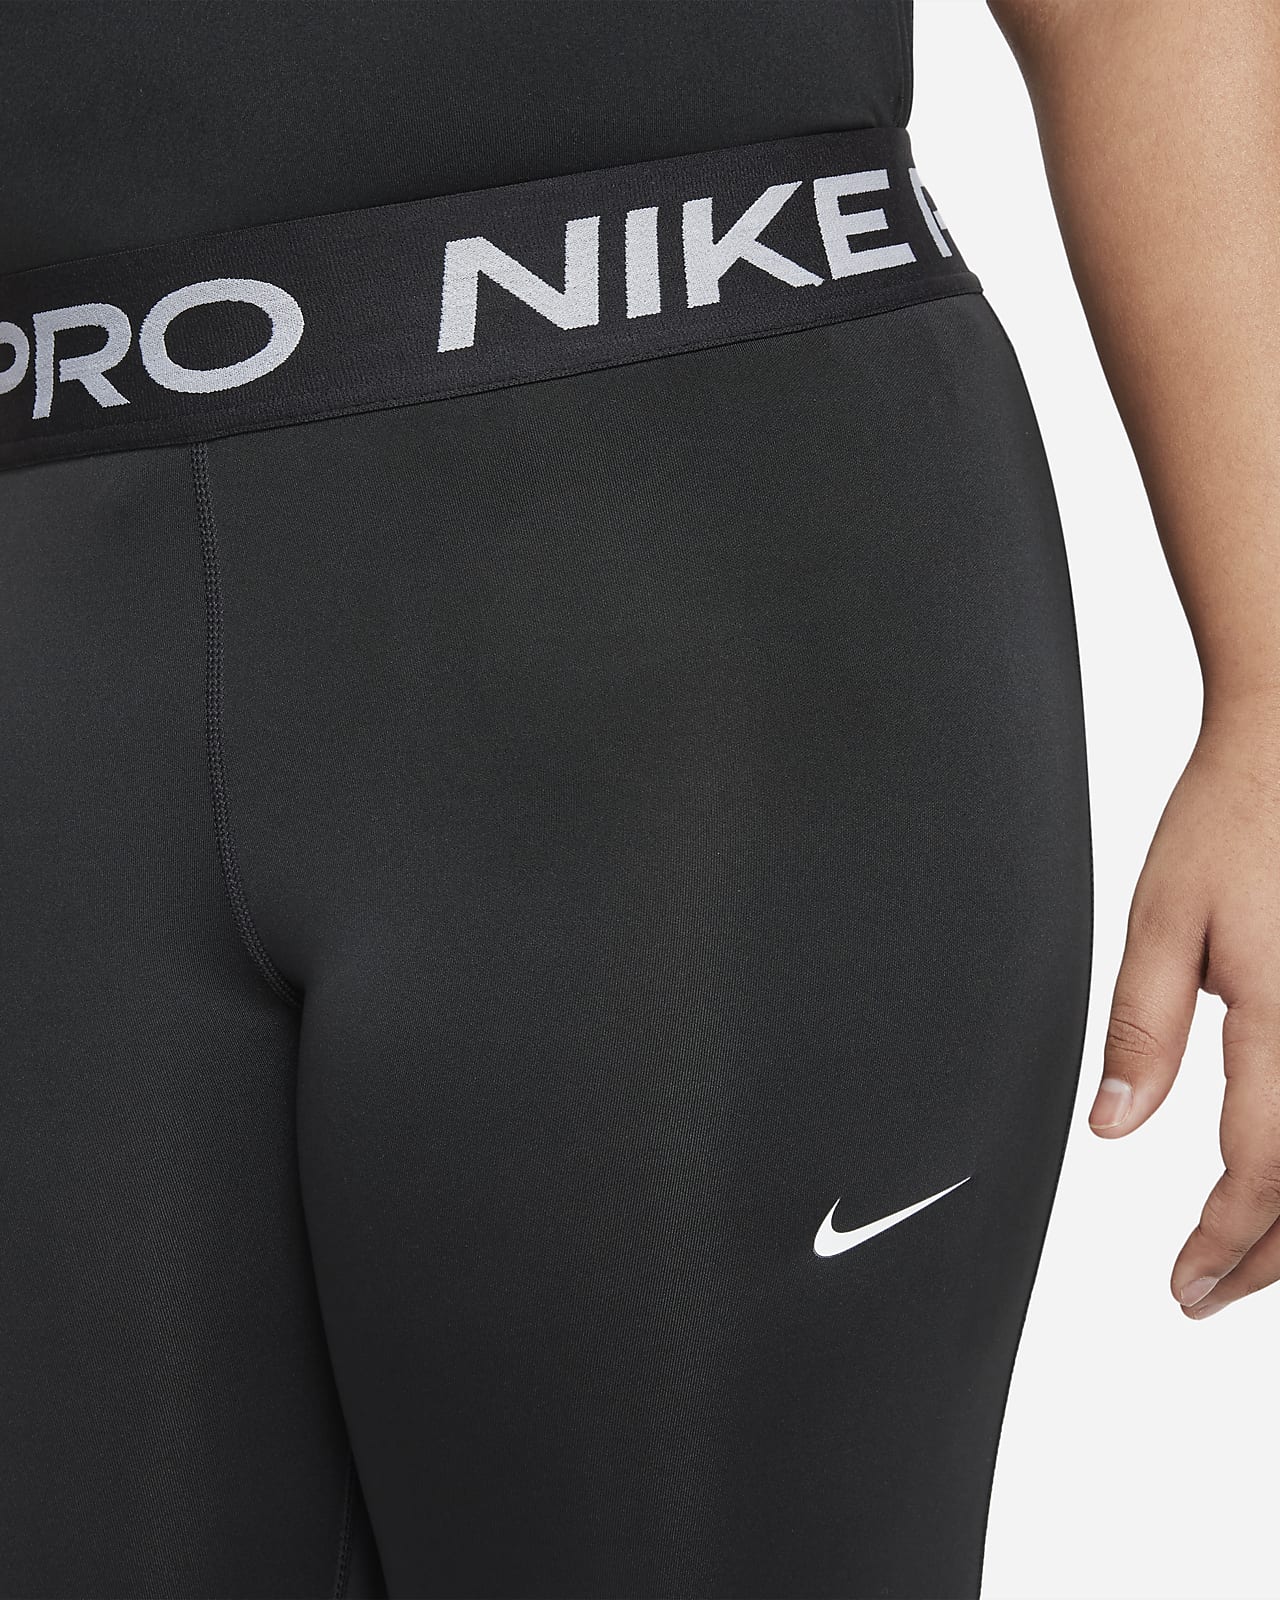 Nike Dri Fit Women's Running Capri Leggings - Size Small - VGUC